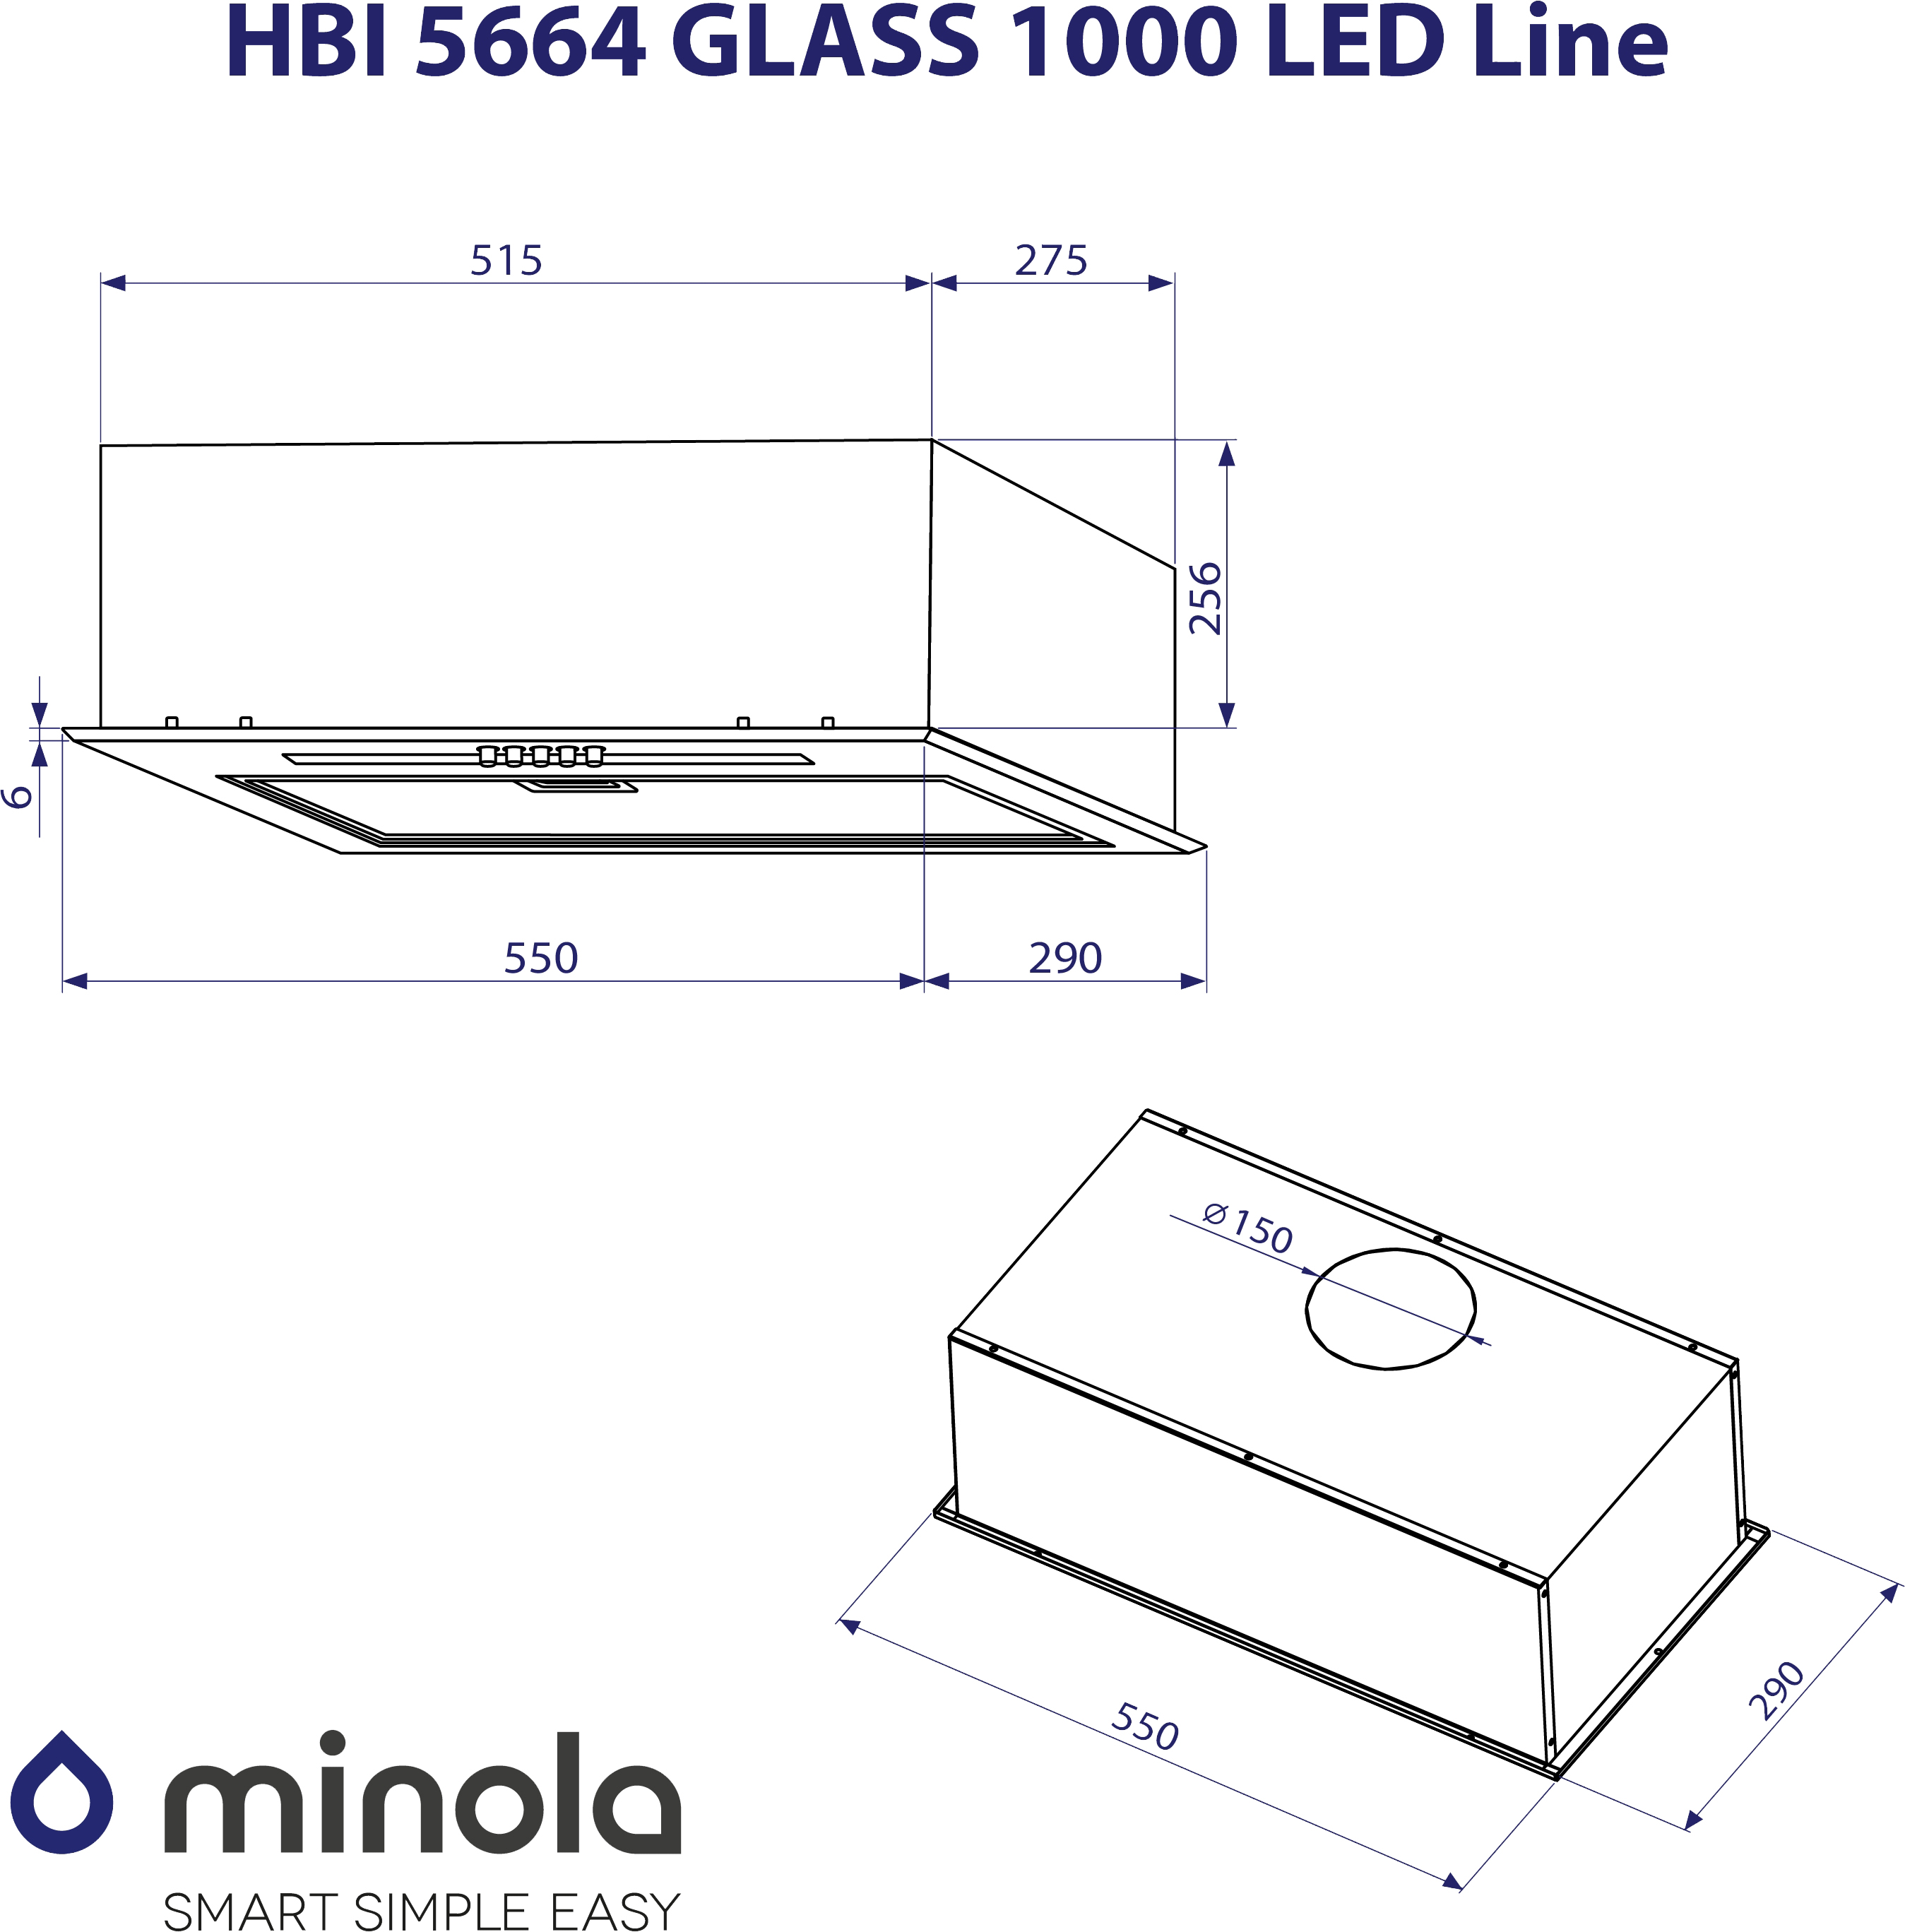 Minola HBI 5664 WH GLASS 1000 LED Line Габаритные размеры